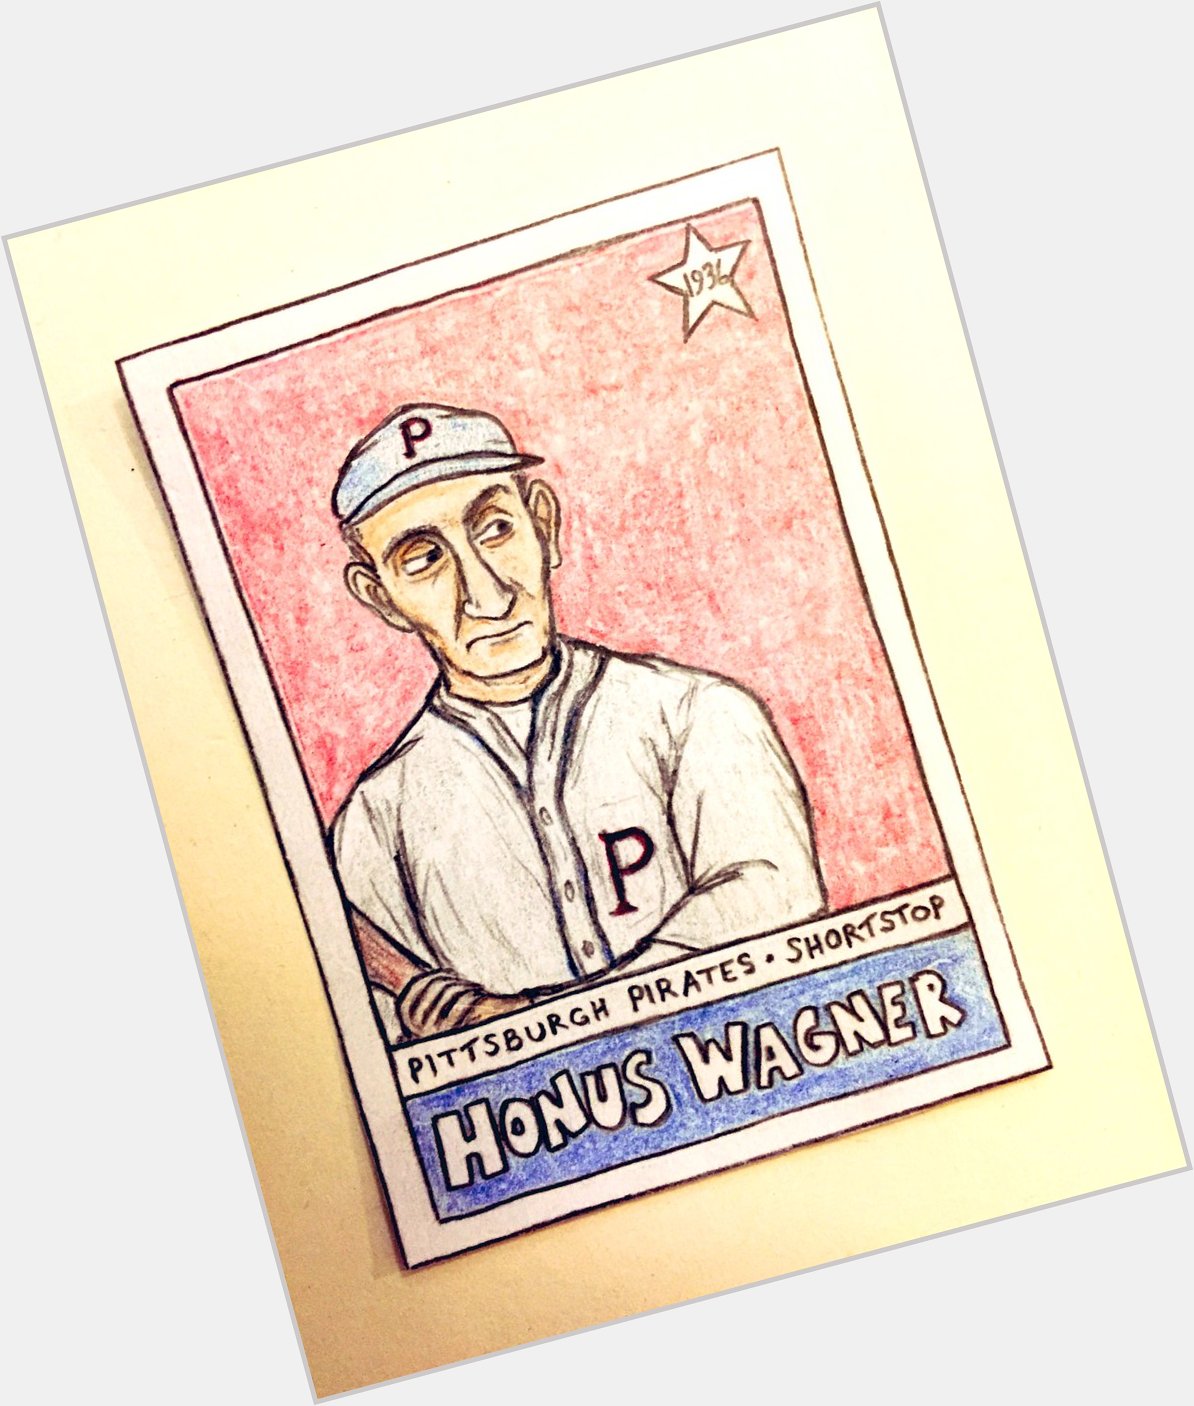 Happy baseball birthday to Hall of Famers Honus Wagner and Eddie Murray!  